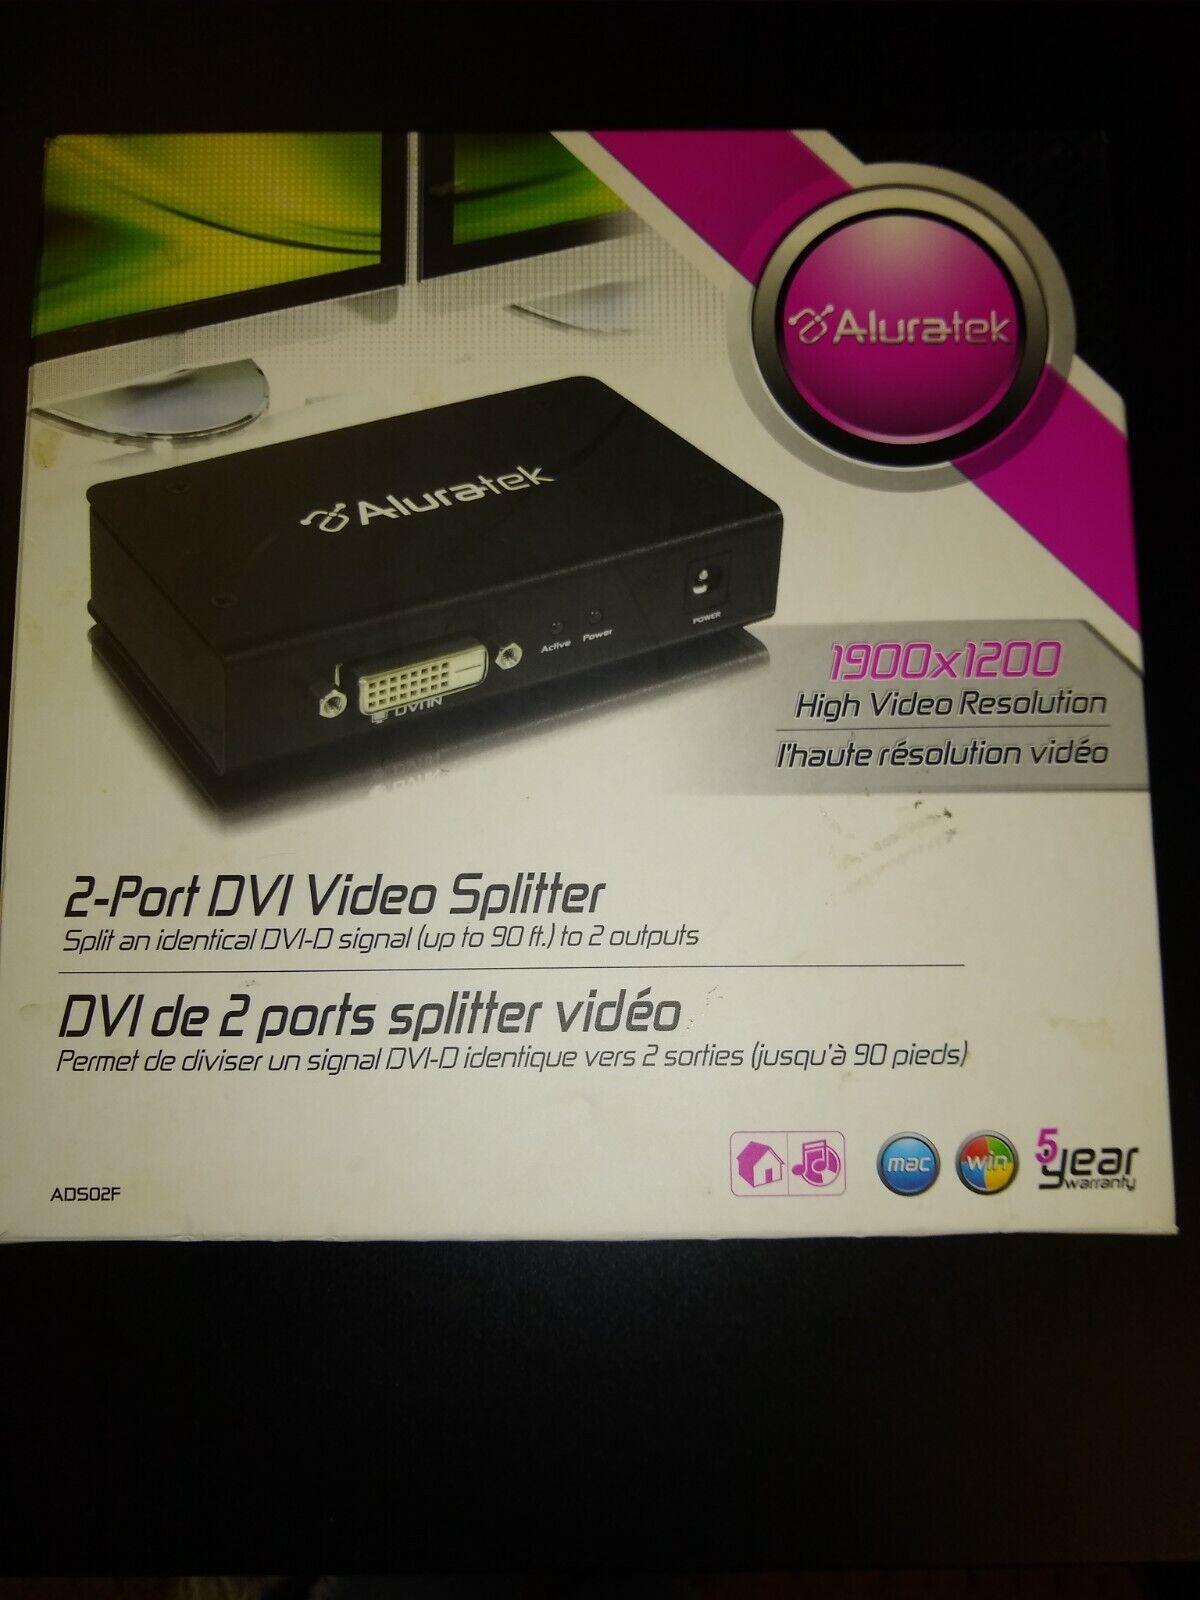 Aluratek ADS02F 1900x1200 2-Port DVI Video Splitter - BRAND NEW